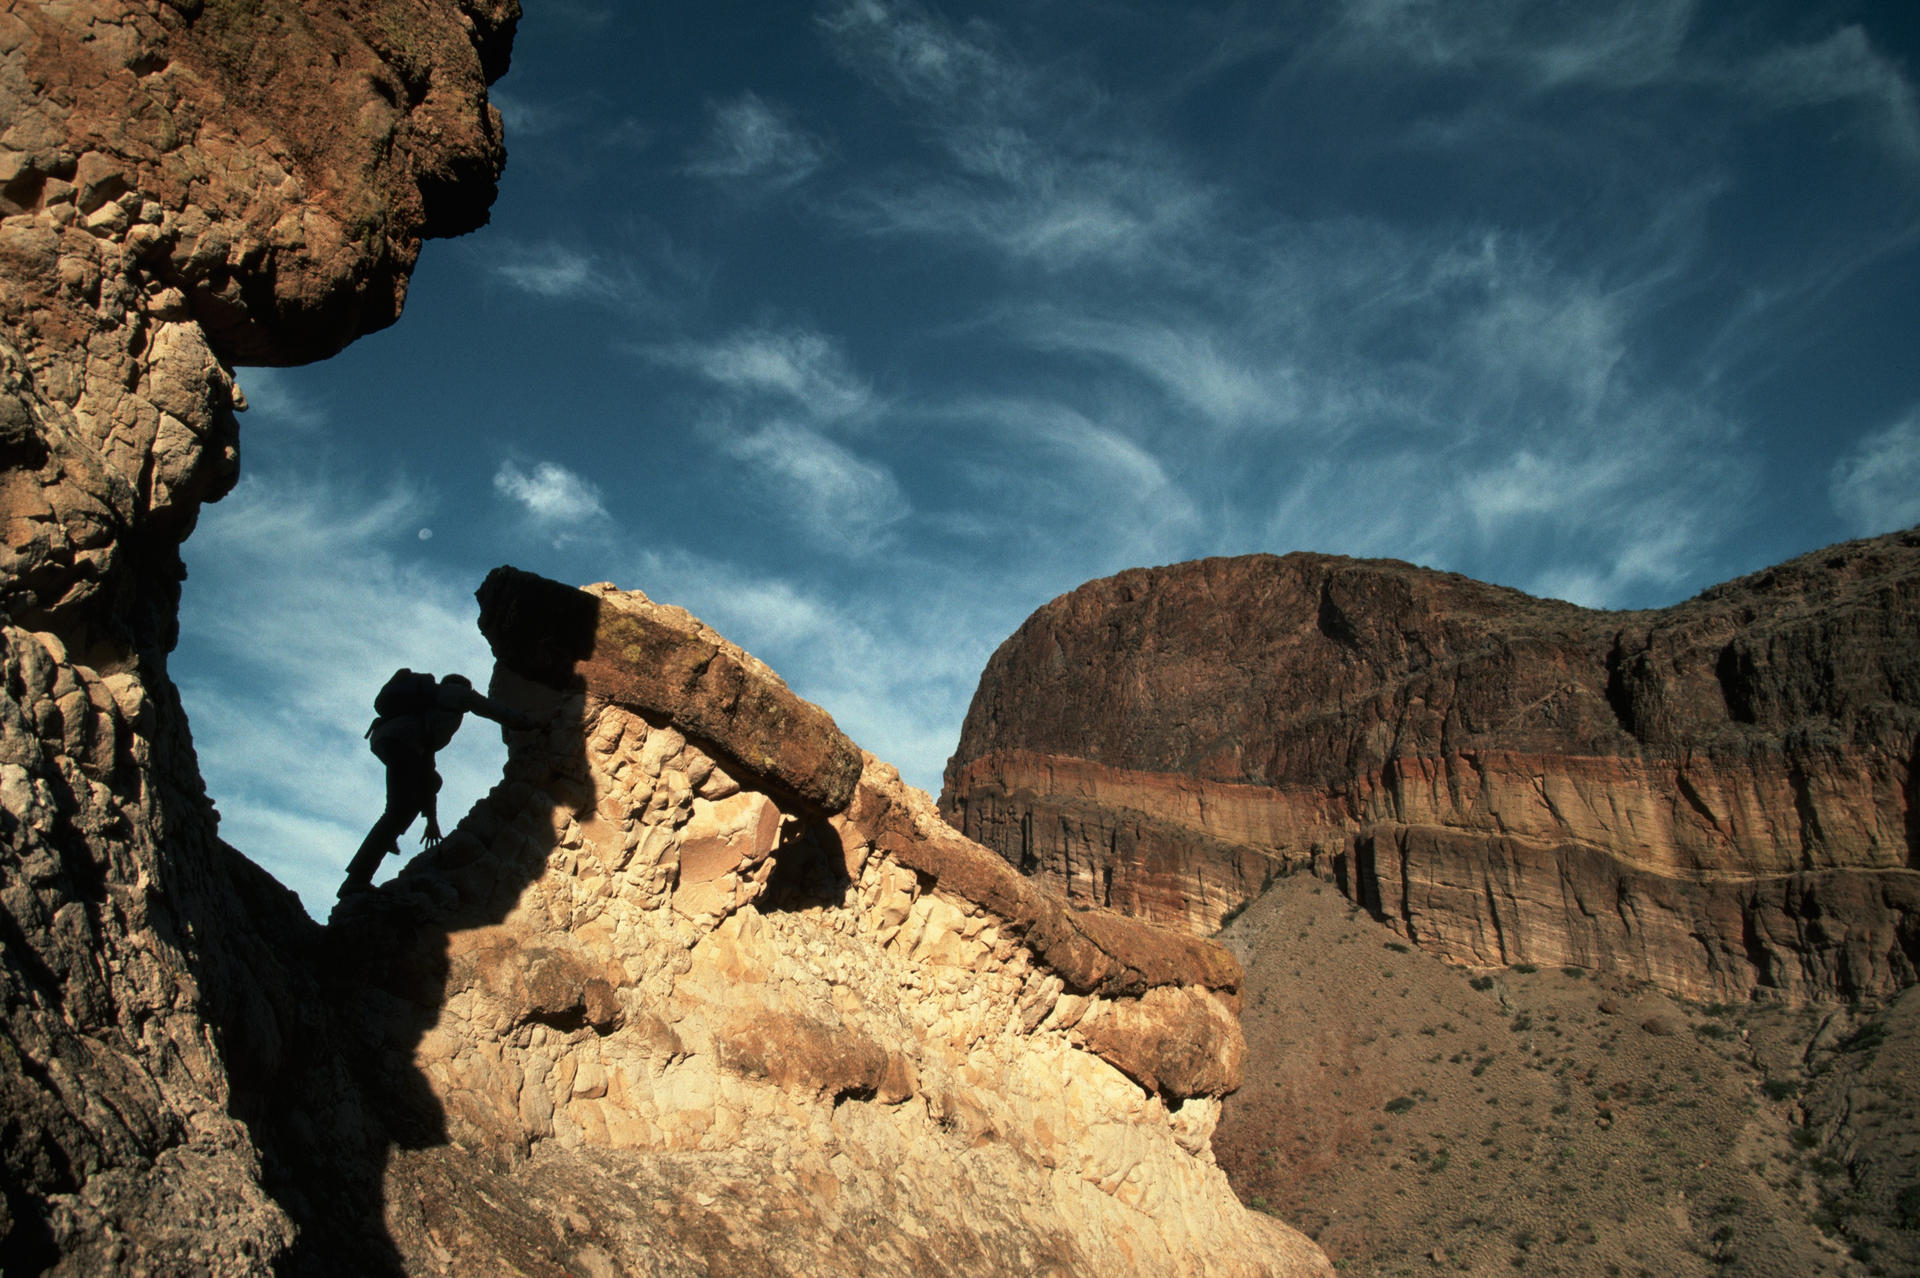 A climber tackles volcanic rock below Burro Mesa. Photo: Corbis